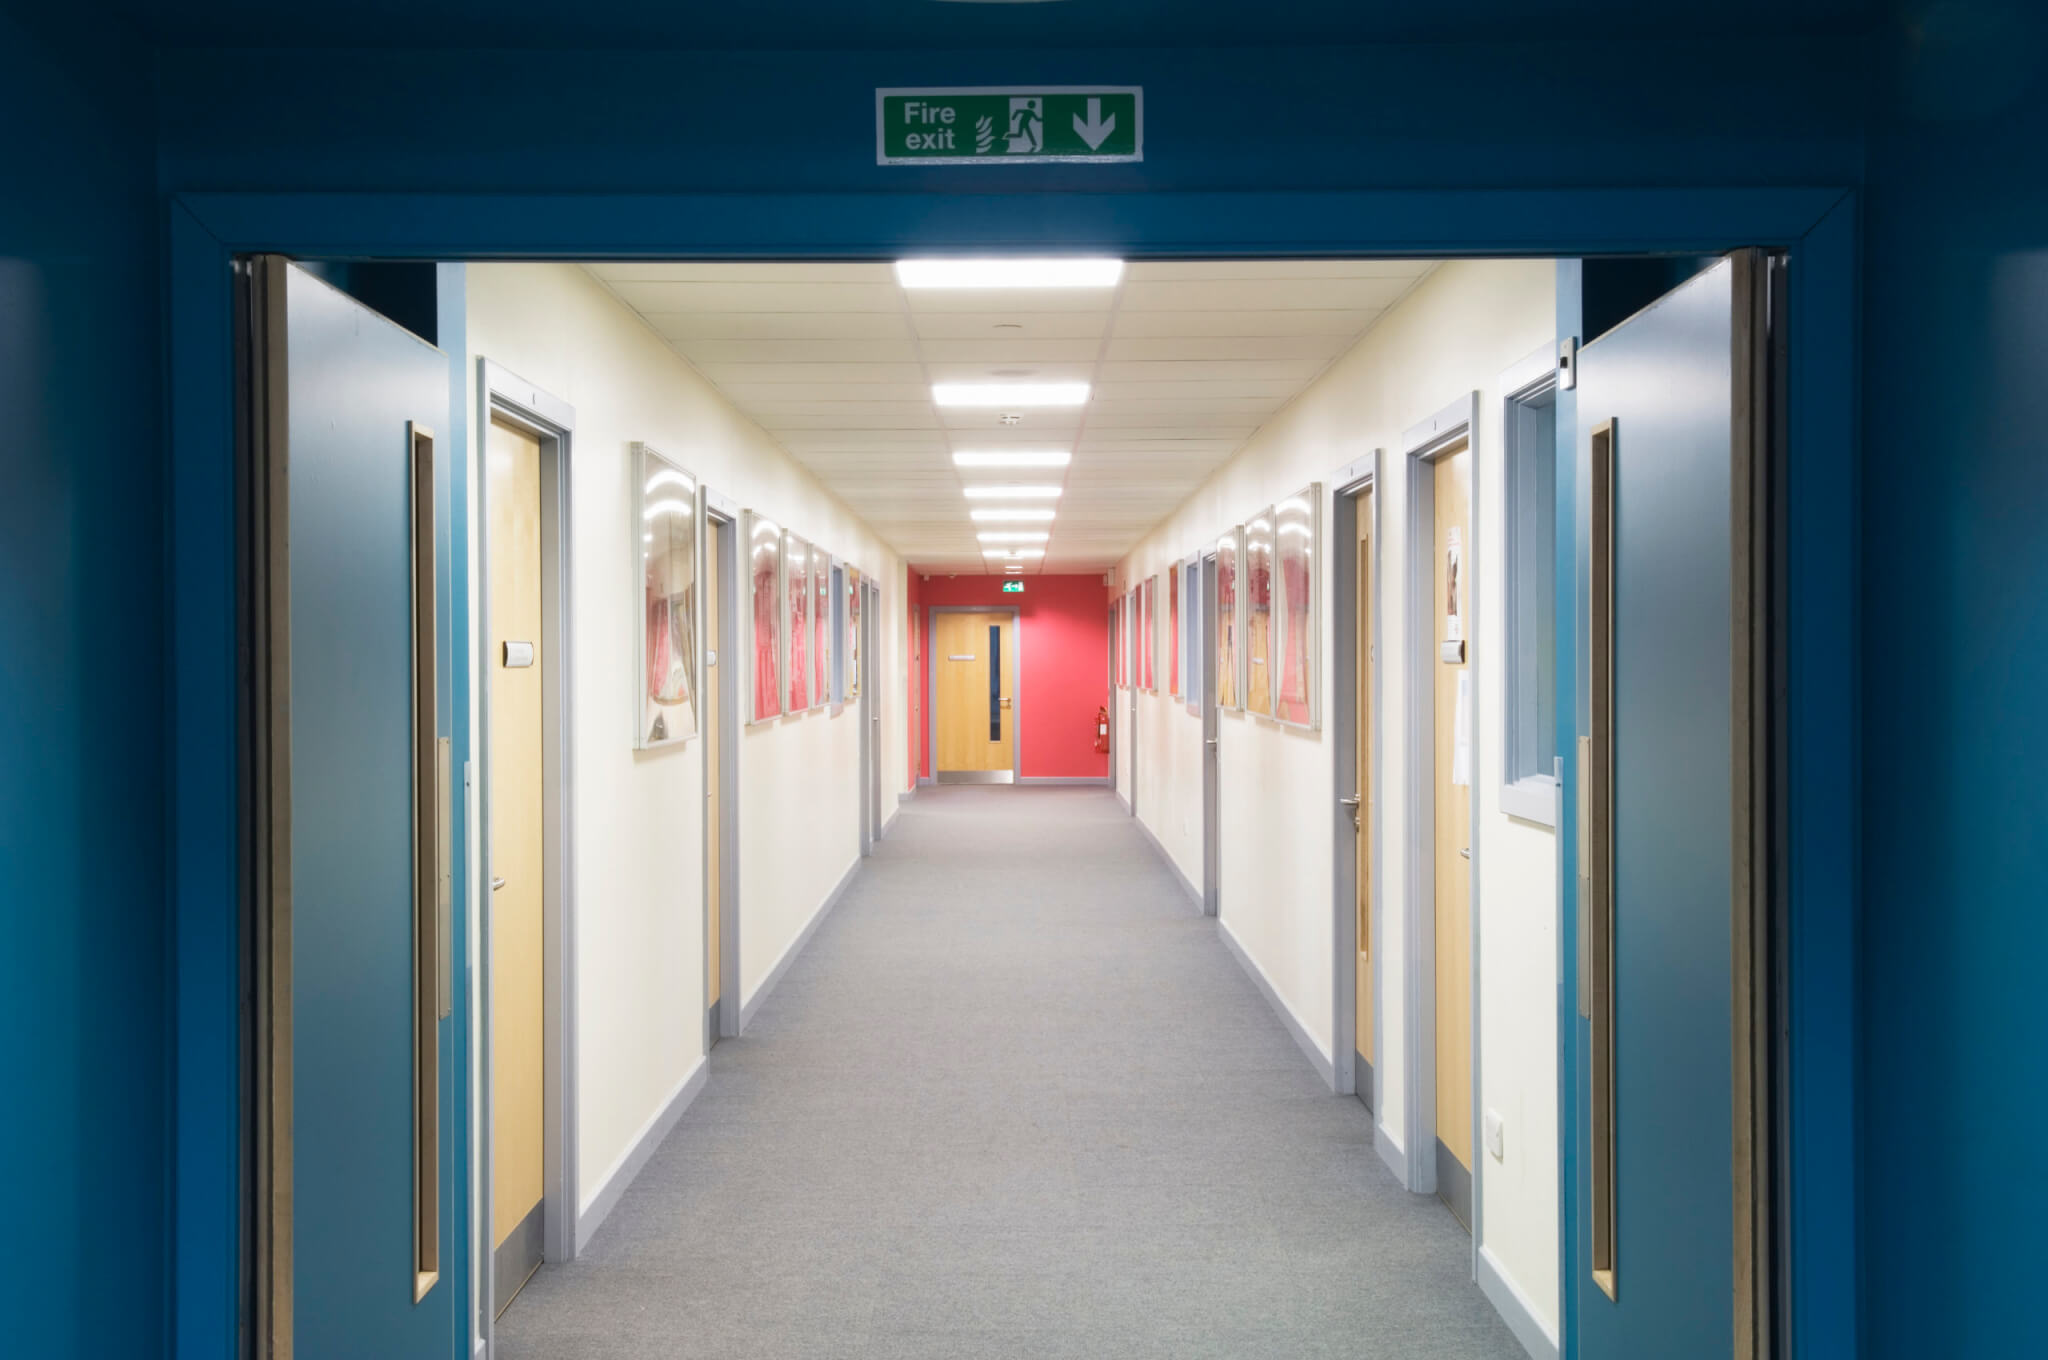 Looking along a corridor in a modern secondary school.